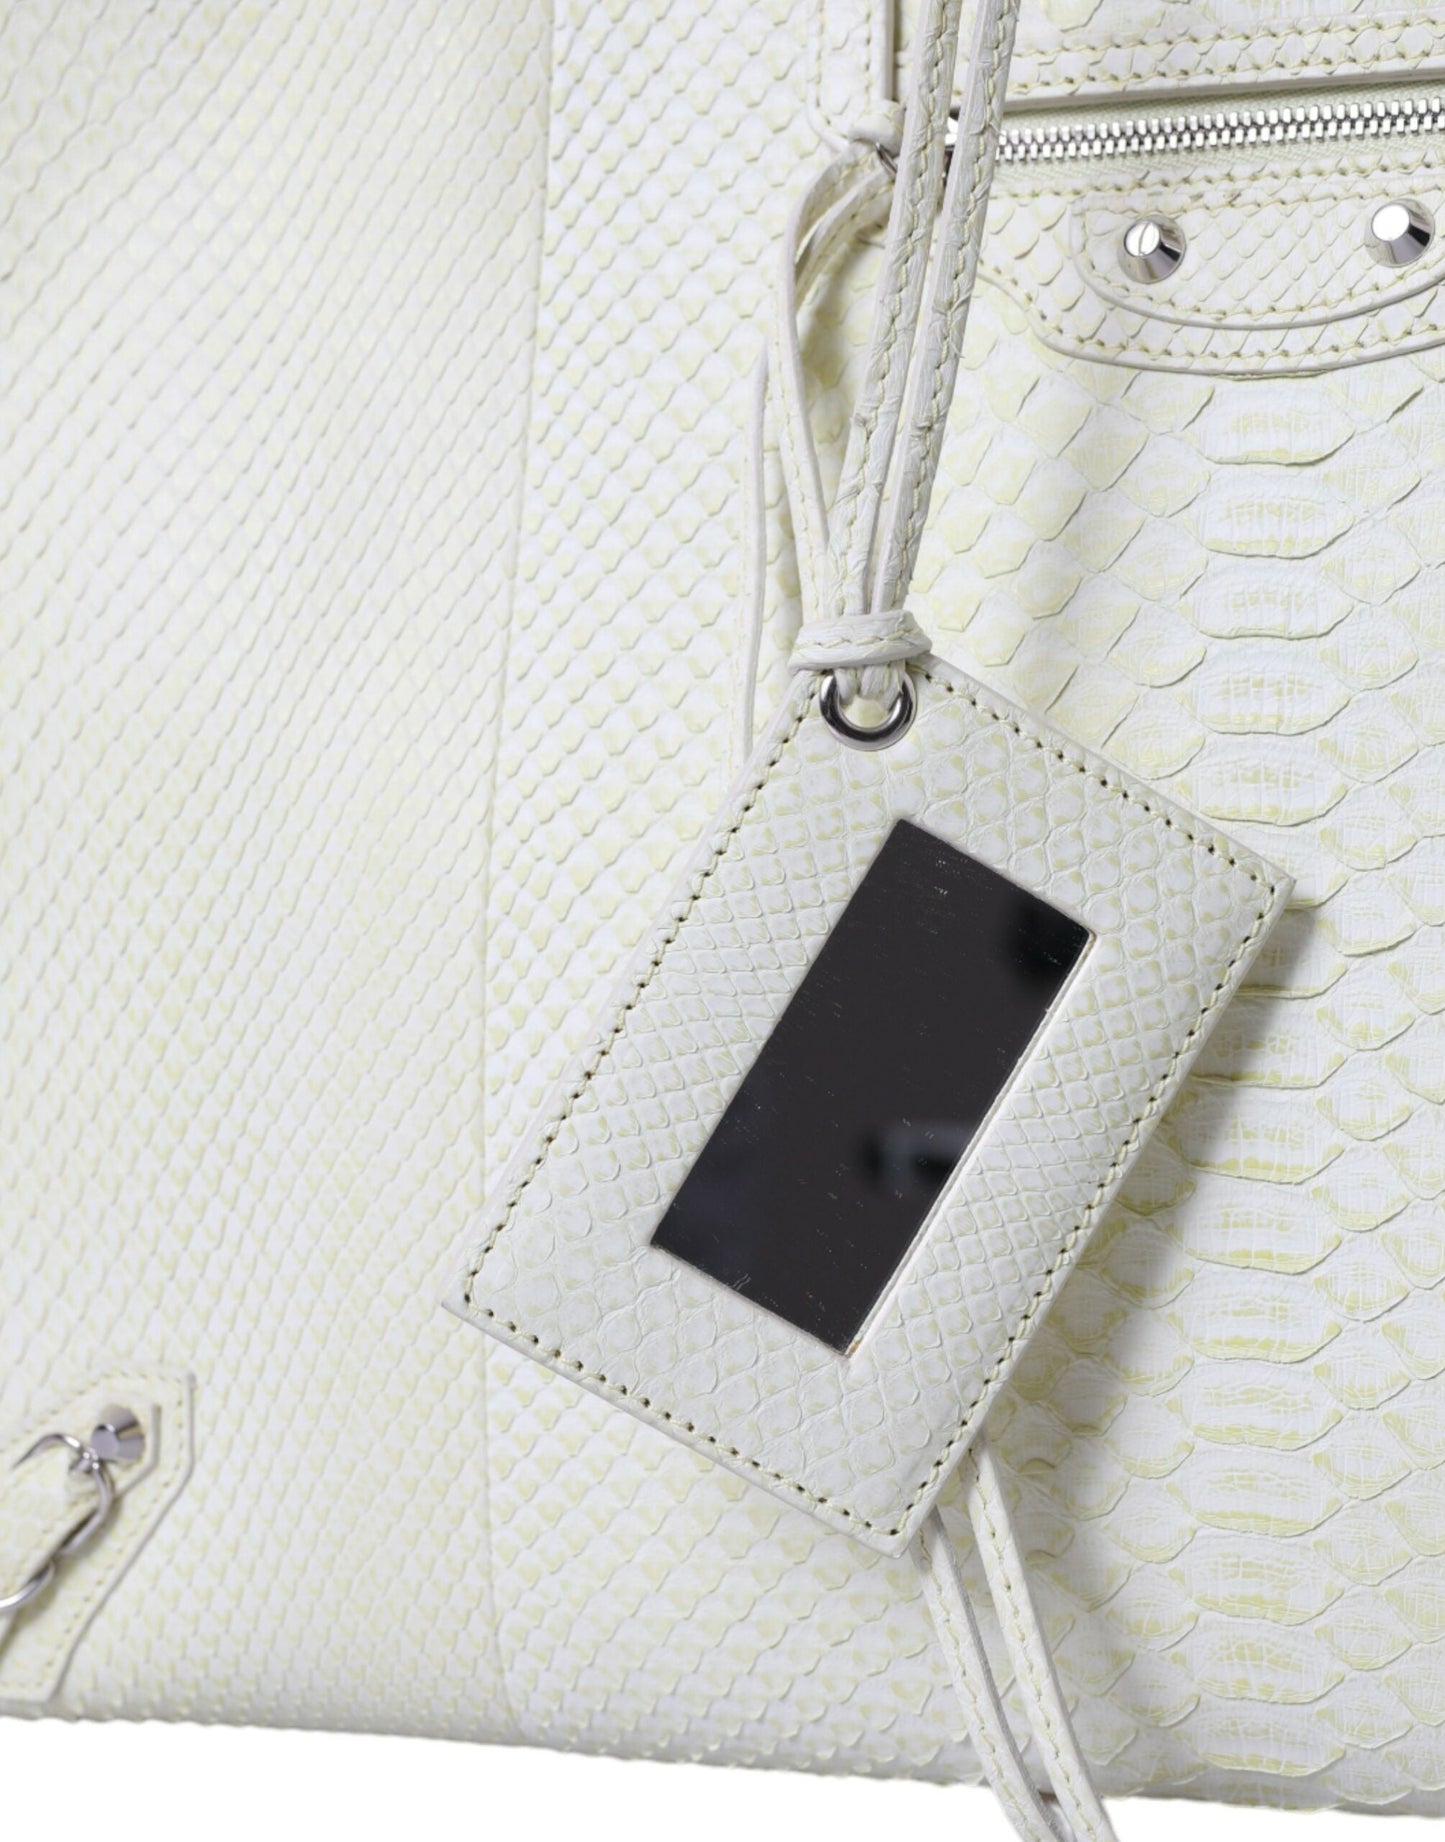 Balenciaga Chic Python Leather Tote in White & Yellow | Fashionsarah.com